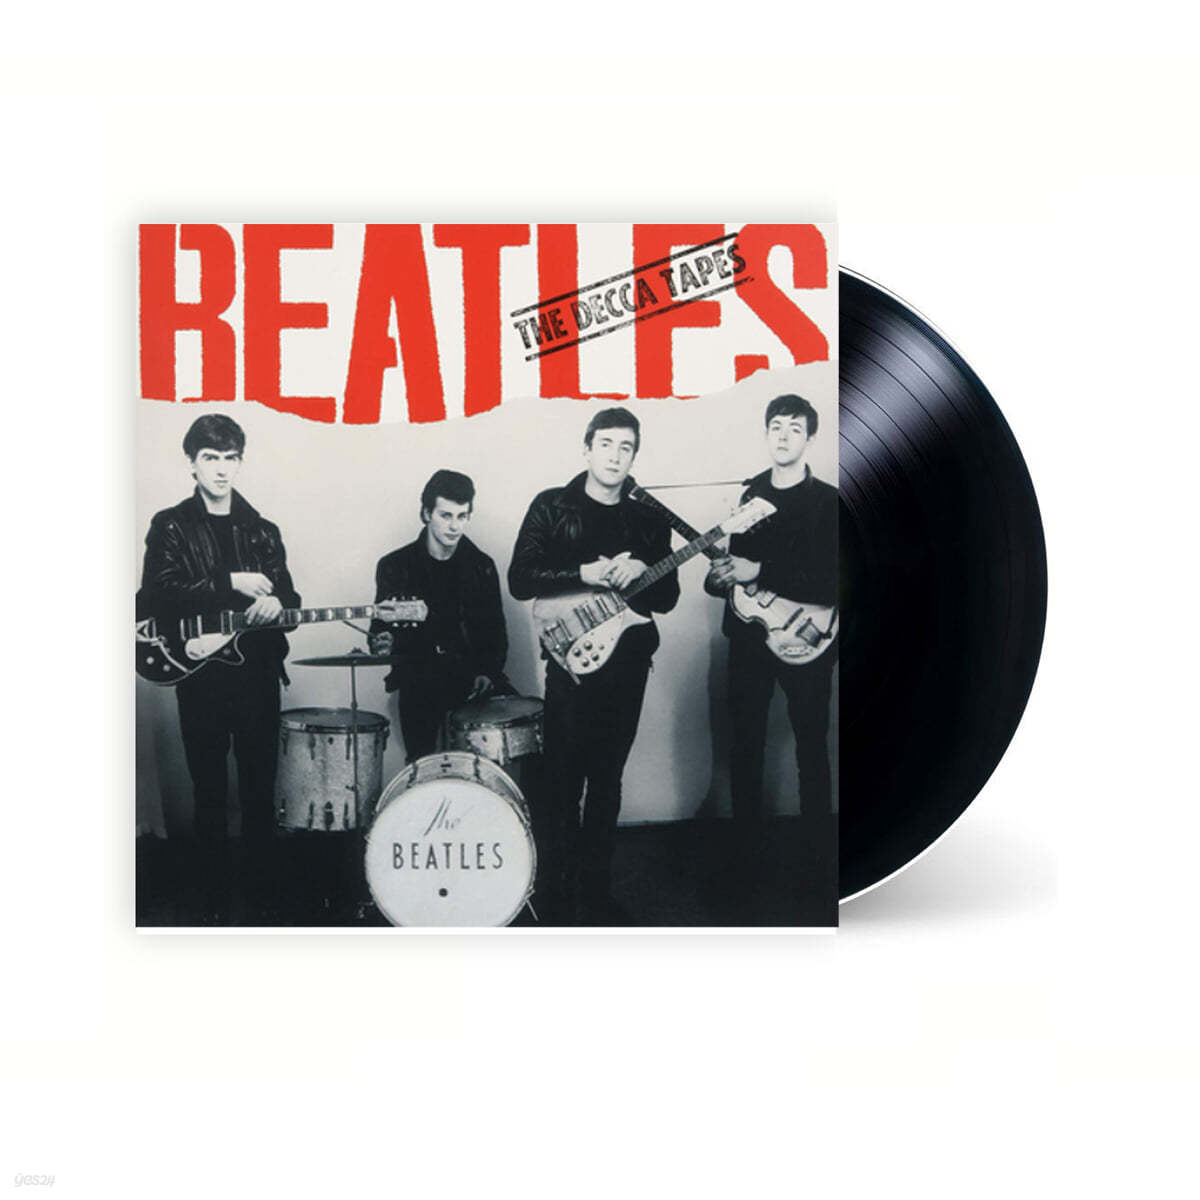 The Beatles (비틀즈) - The Decca Tapes [LP]